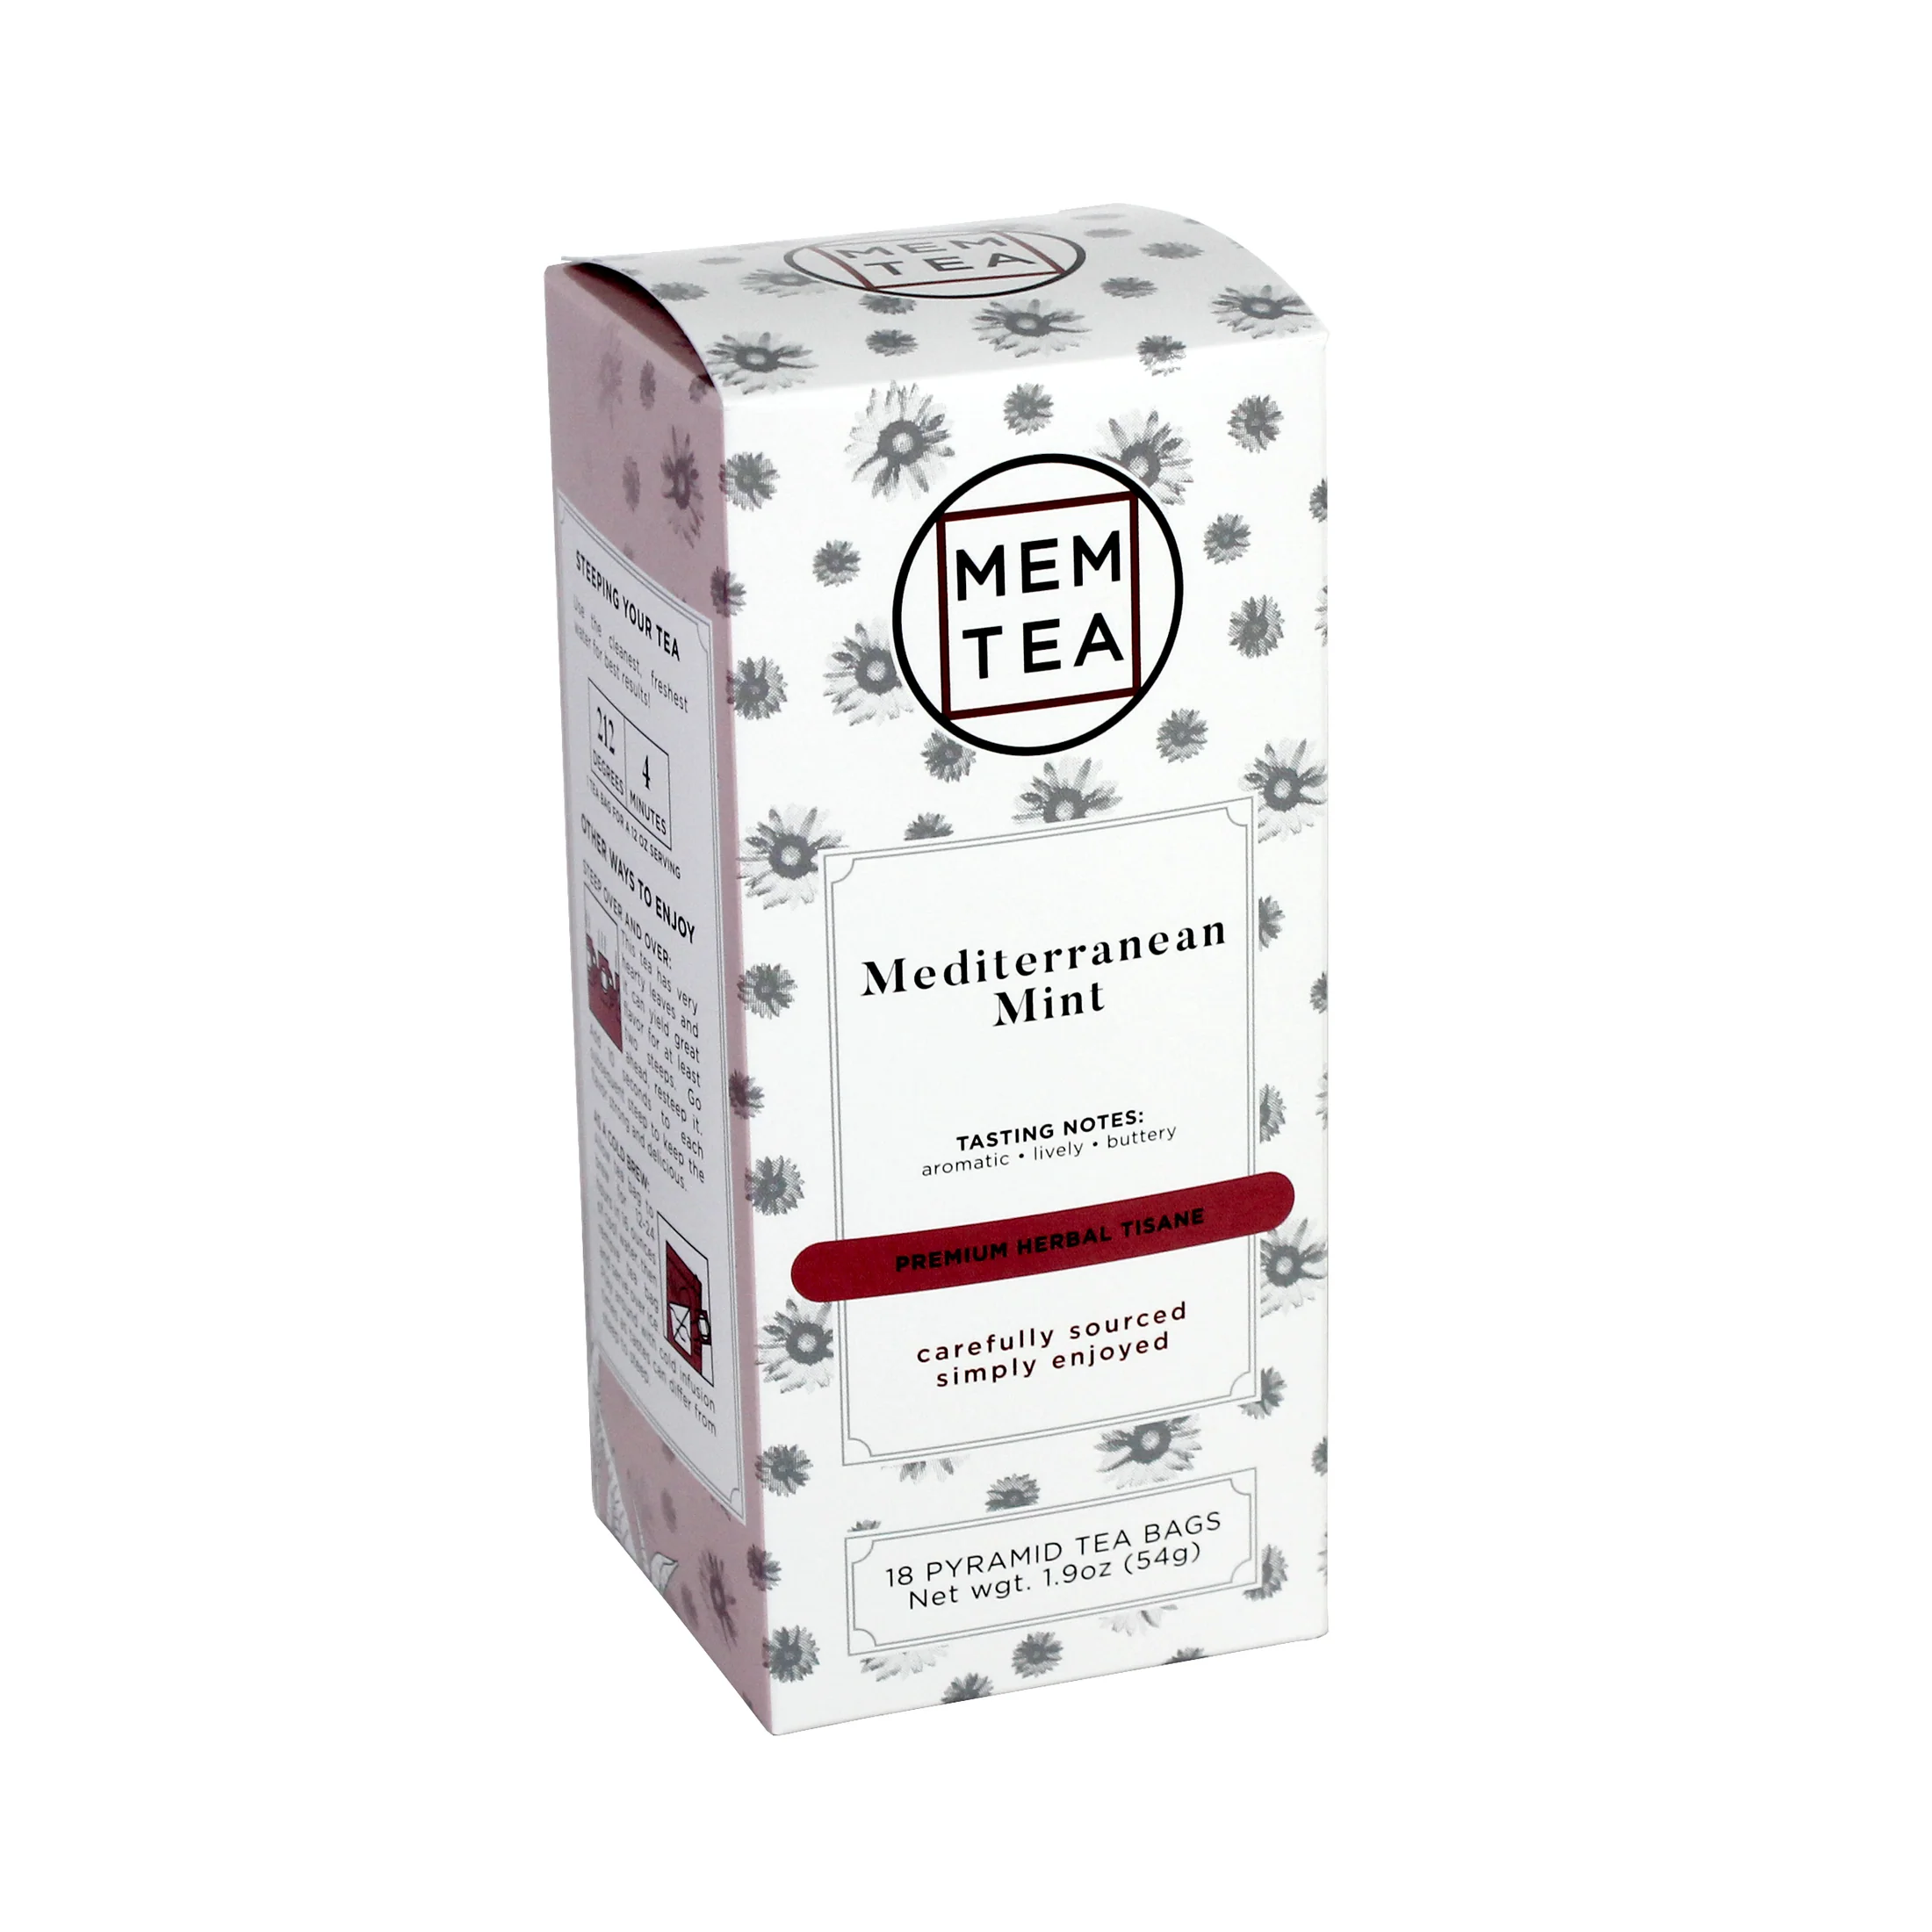 mediterranean mint tea - mem tea box